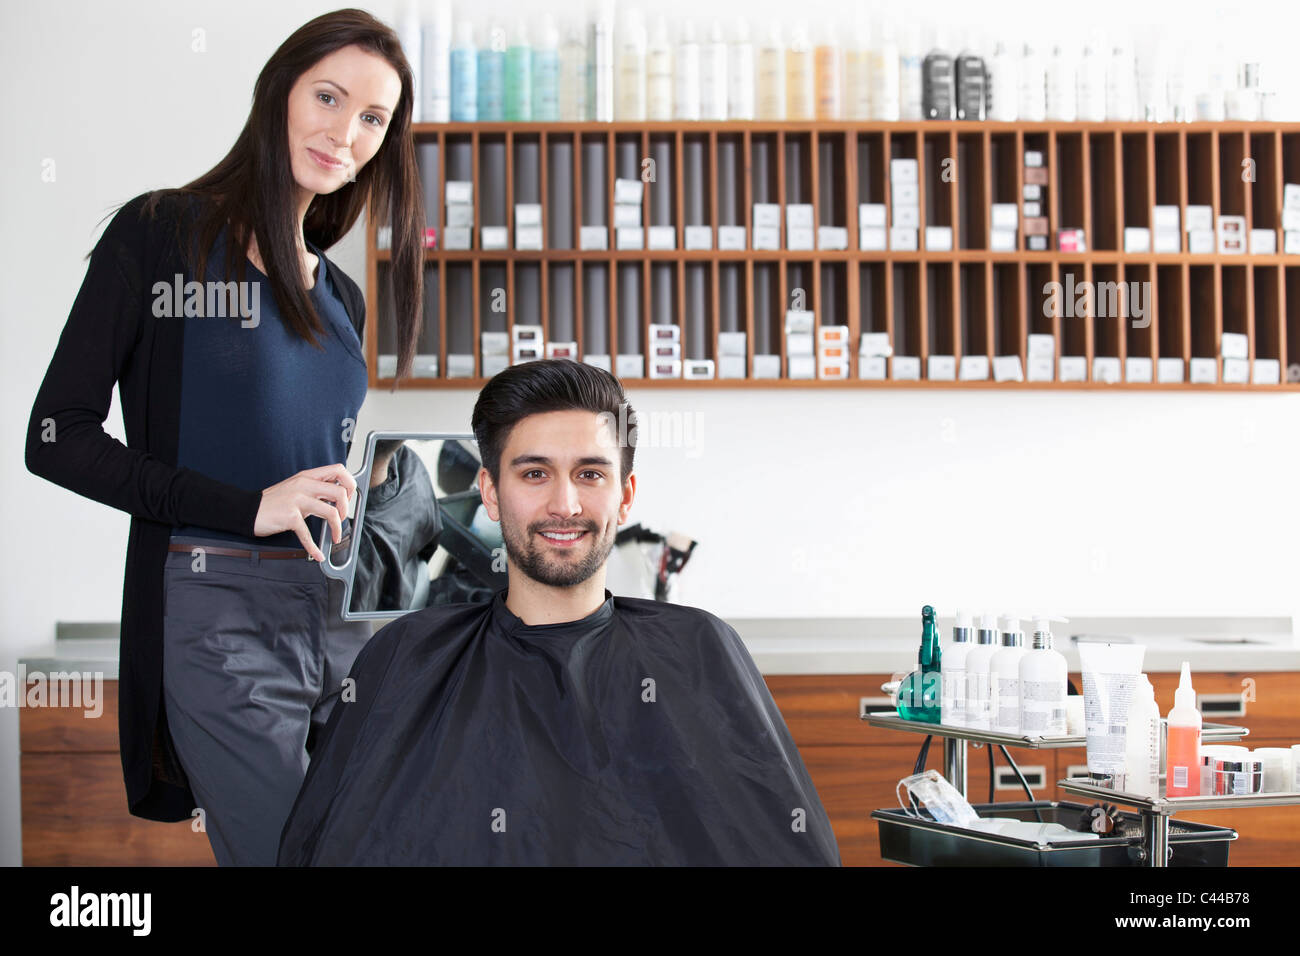 A happy customer in a hair salon Stock Photo